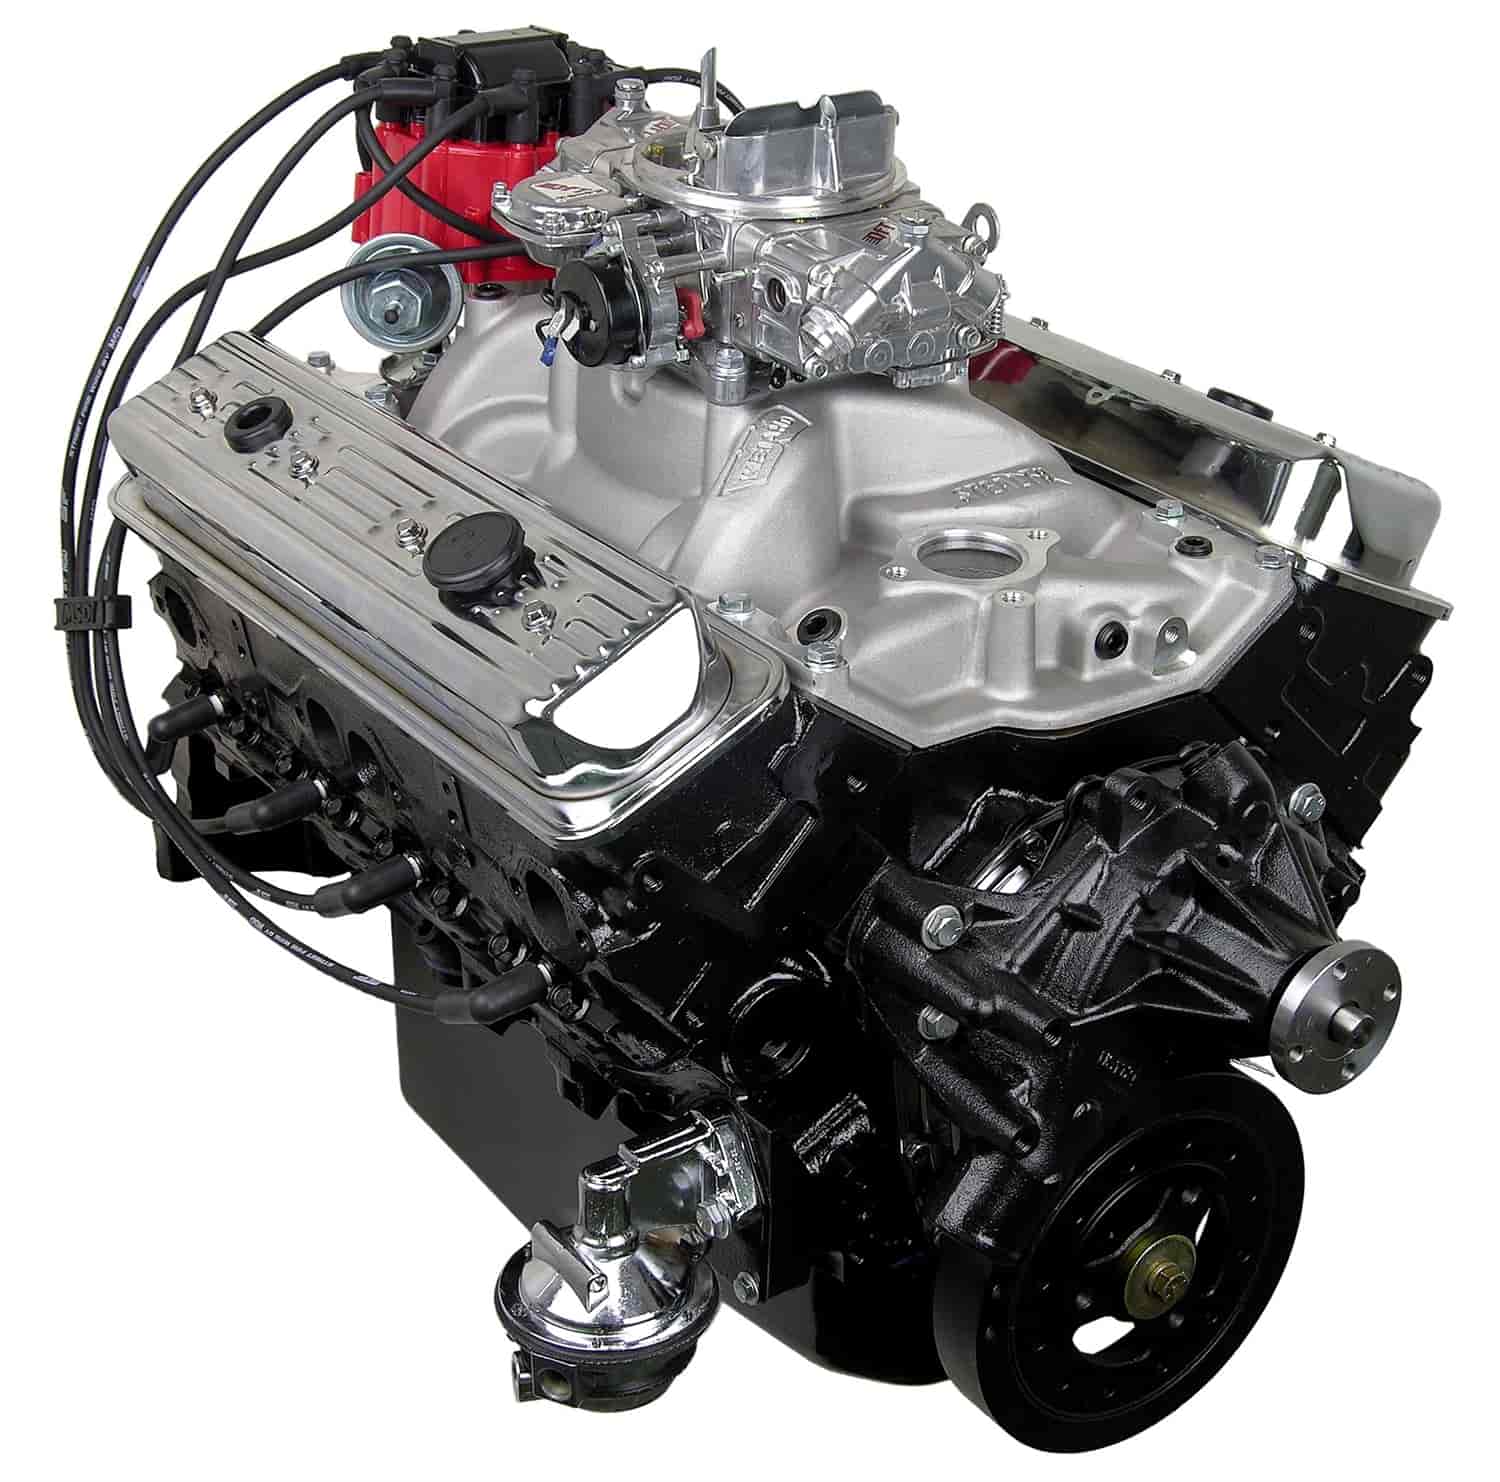 High Performance Crate Engine Small Block Chevy 383ci / 390HP / 460TQ